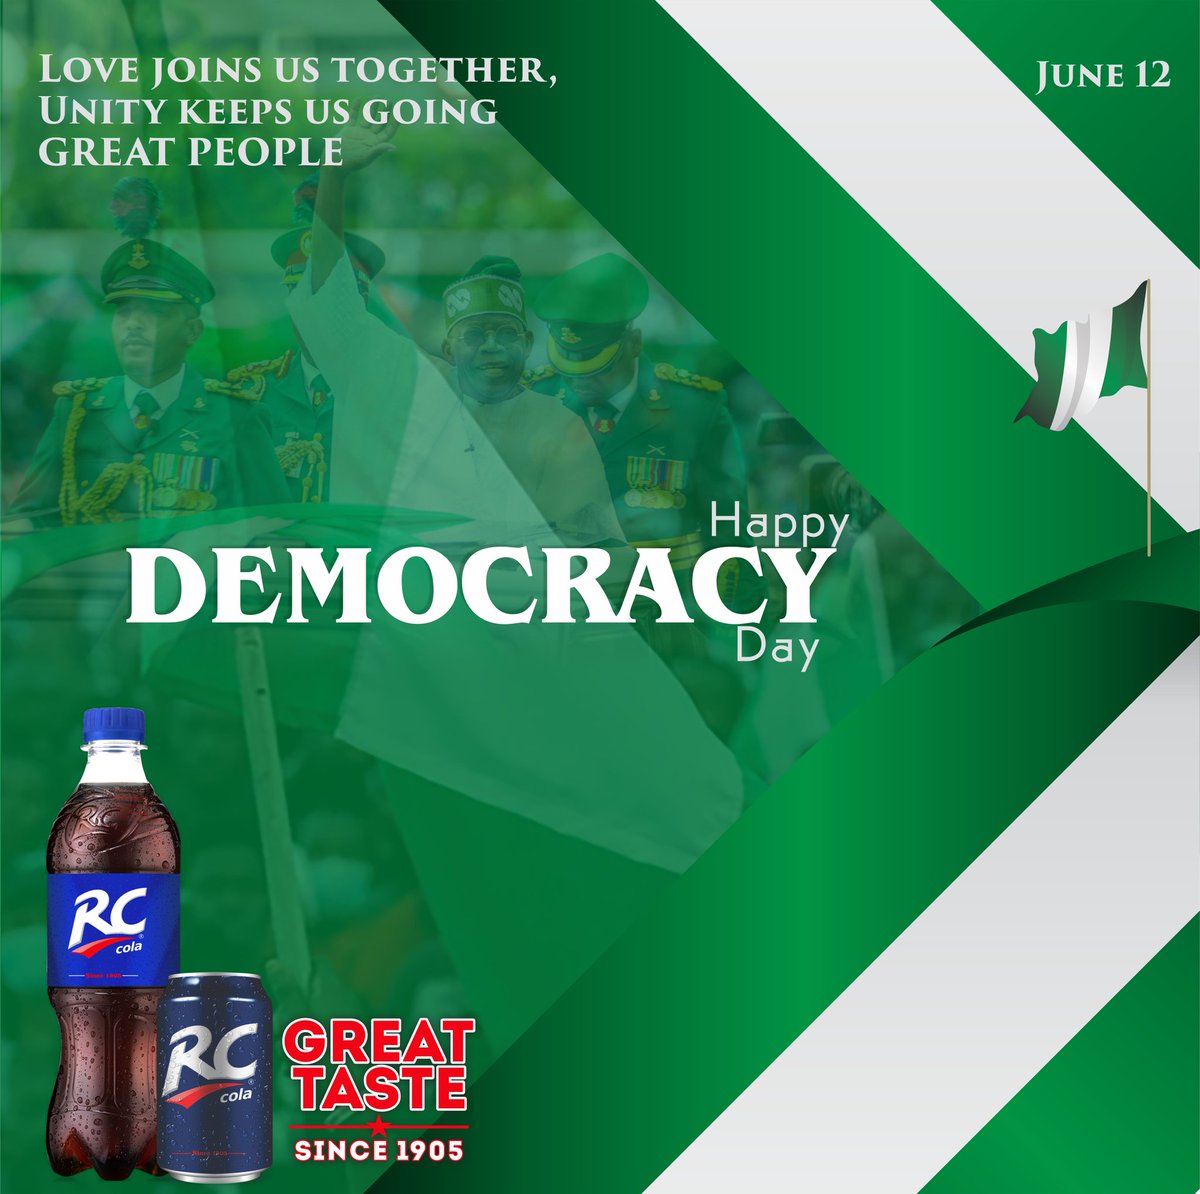 #RCCola #RCColaNigeria #DrinkRCCola #greattaste #since1905 #RCCI #happydemocracydaynigeria #greatpeople